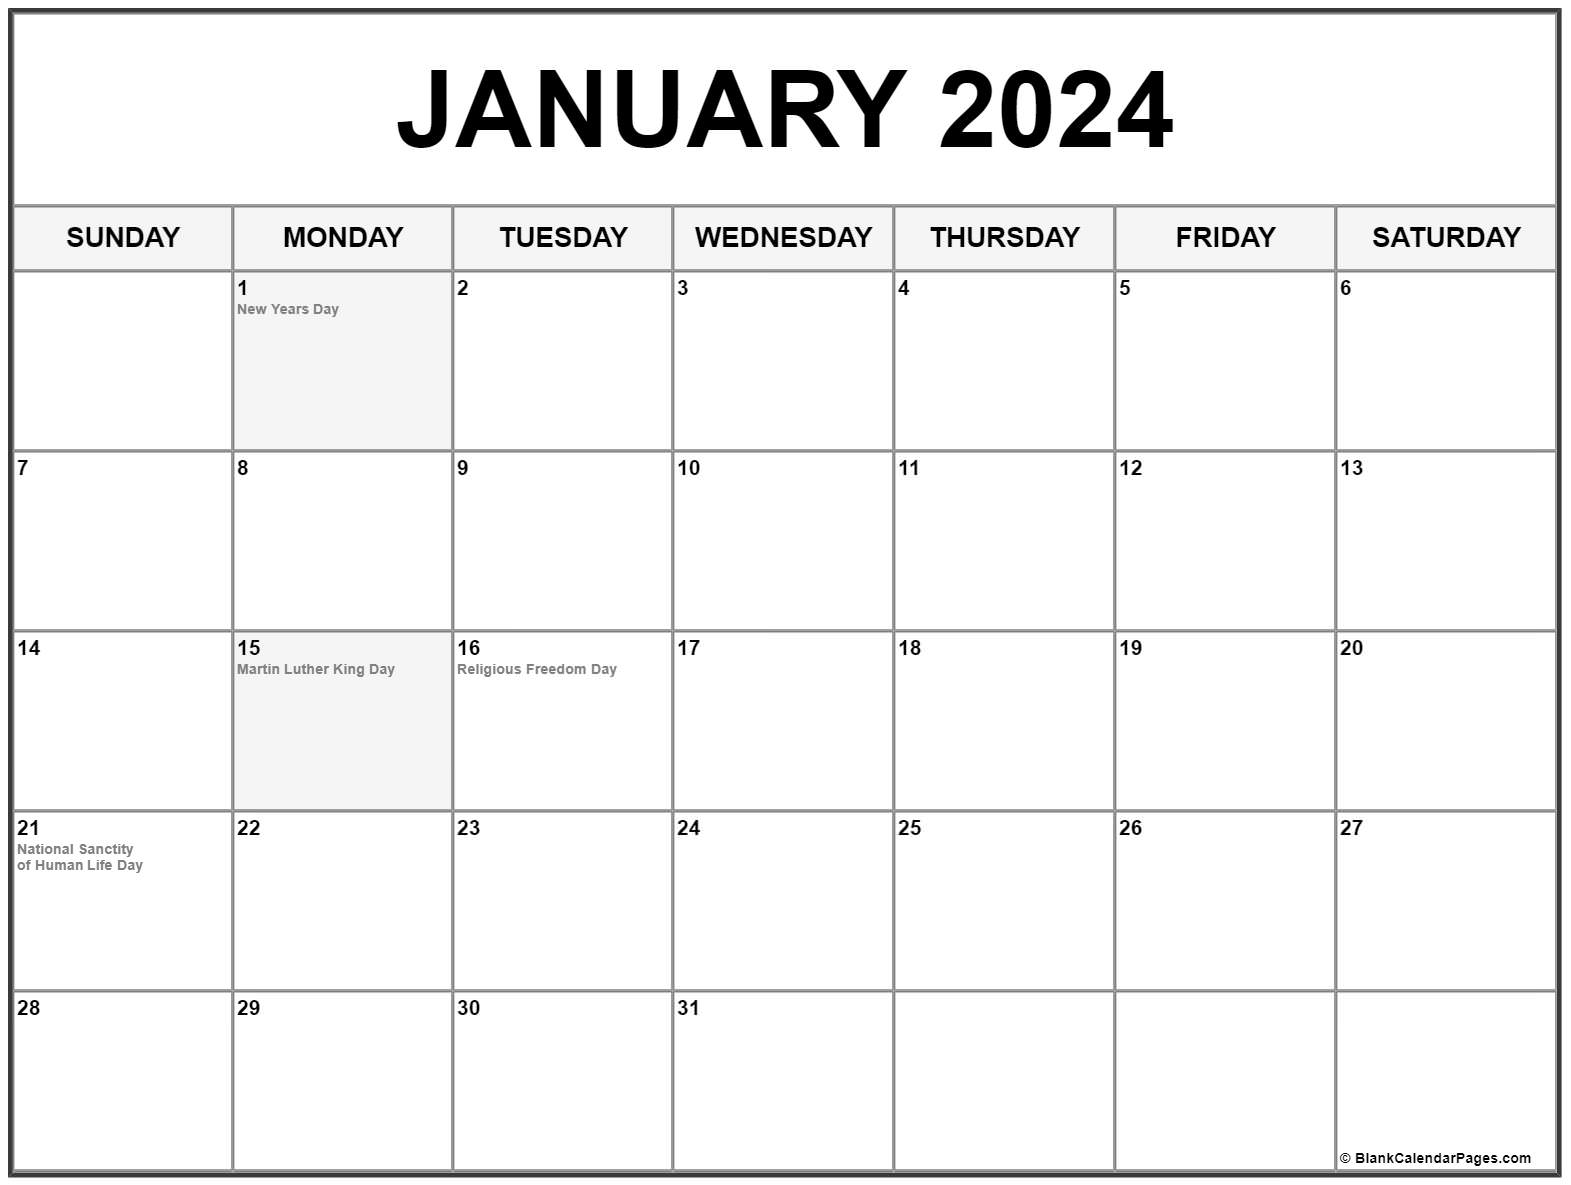 December 2022 January 2023 Calendar Printable January 2023 With Holidays Calendar